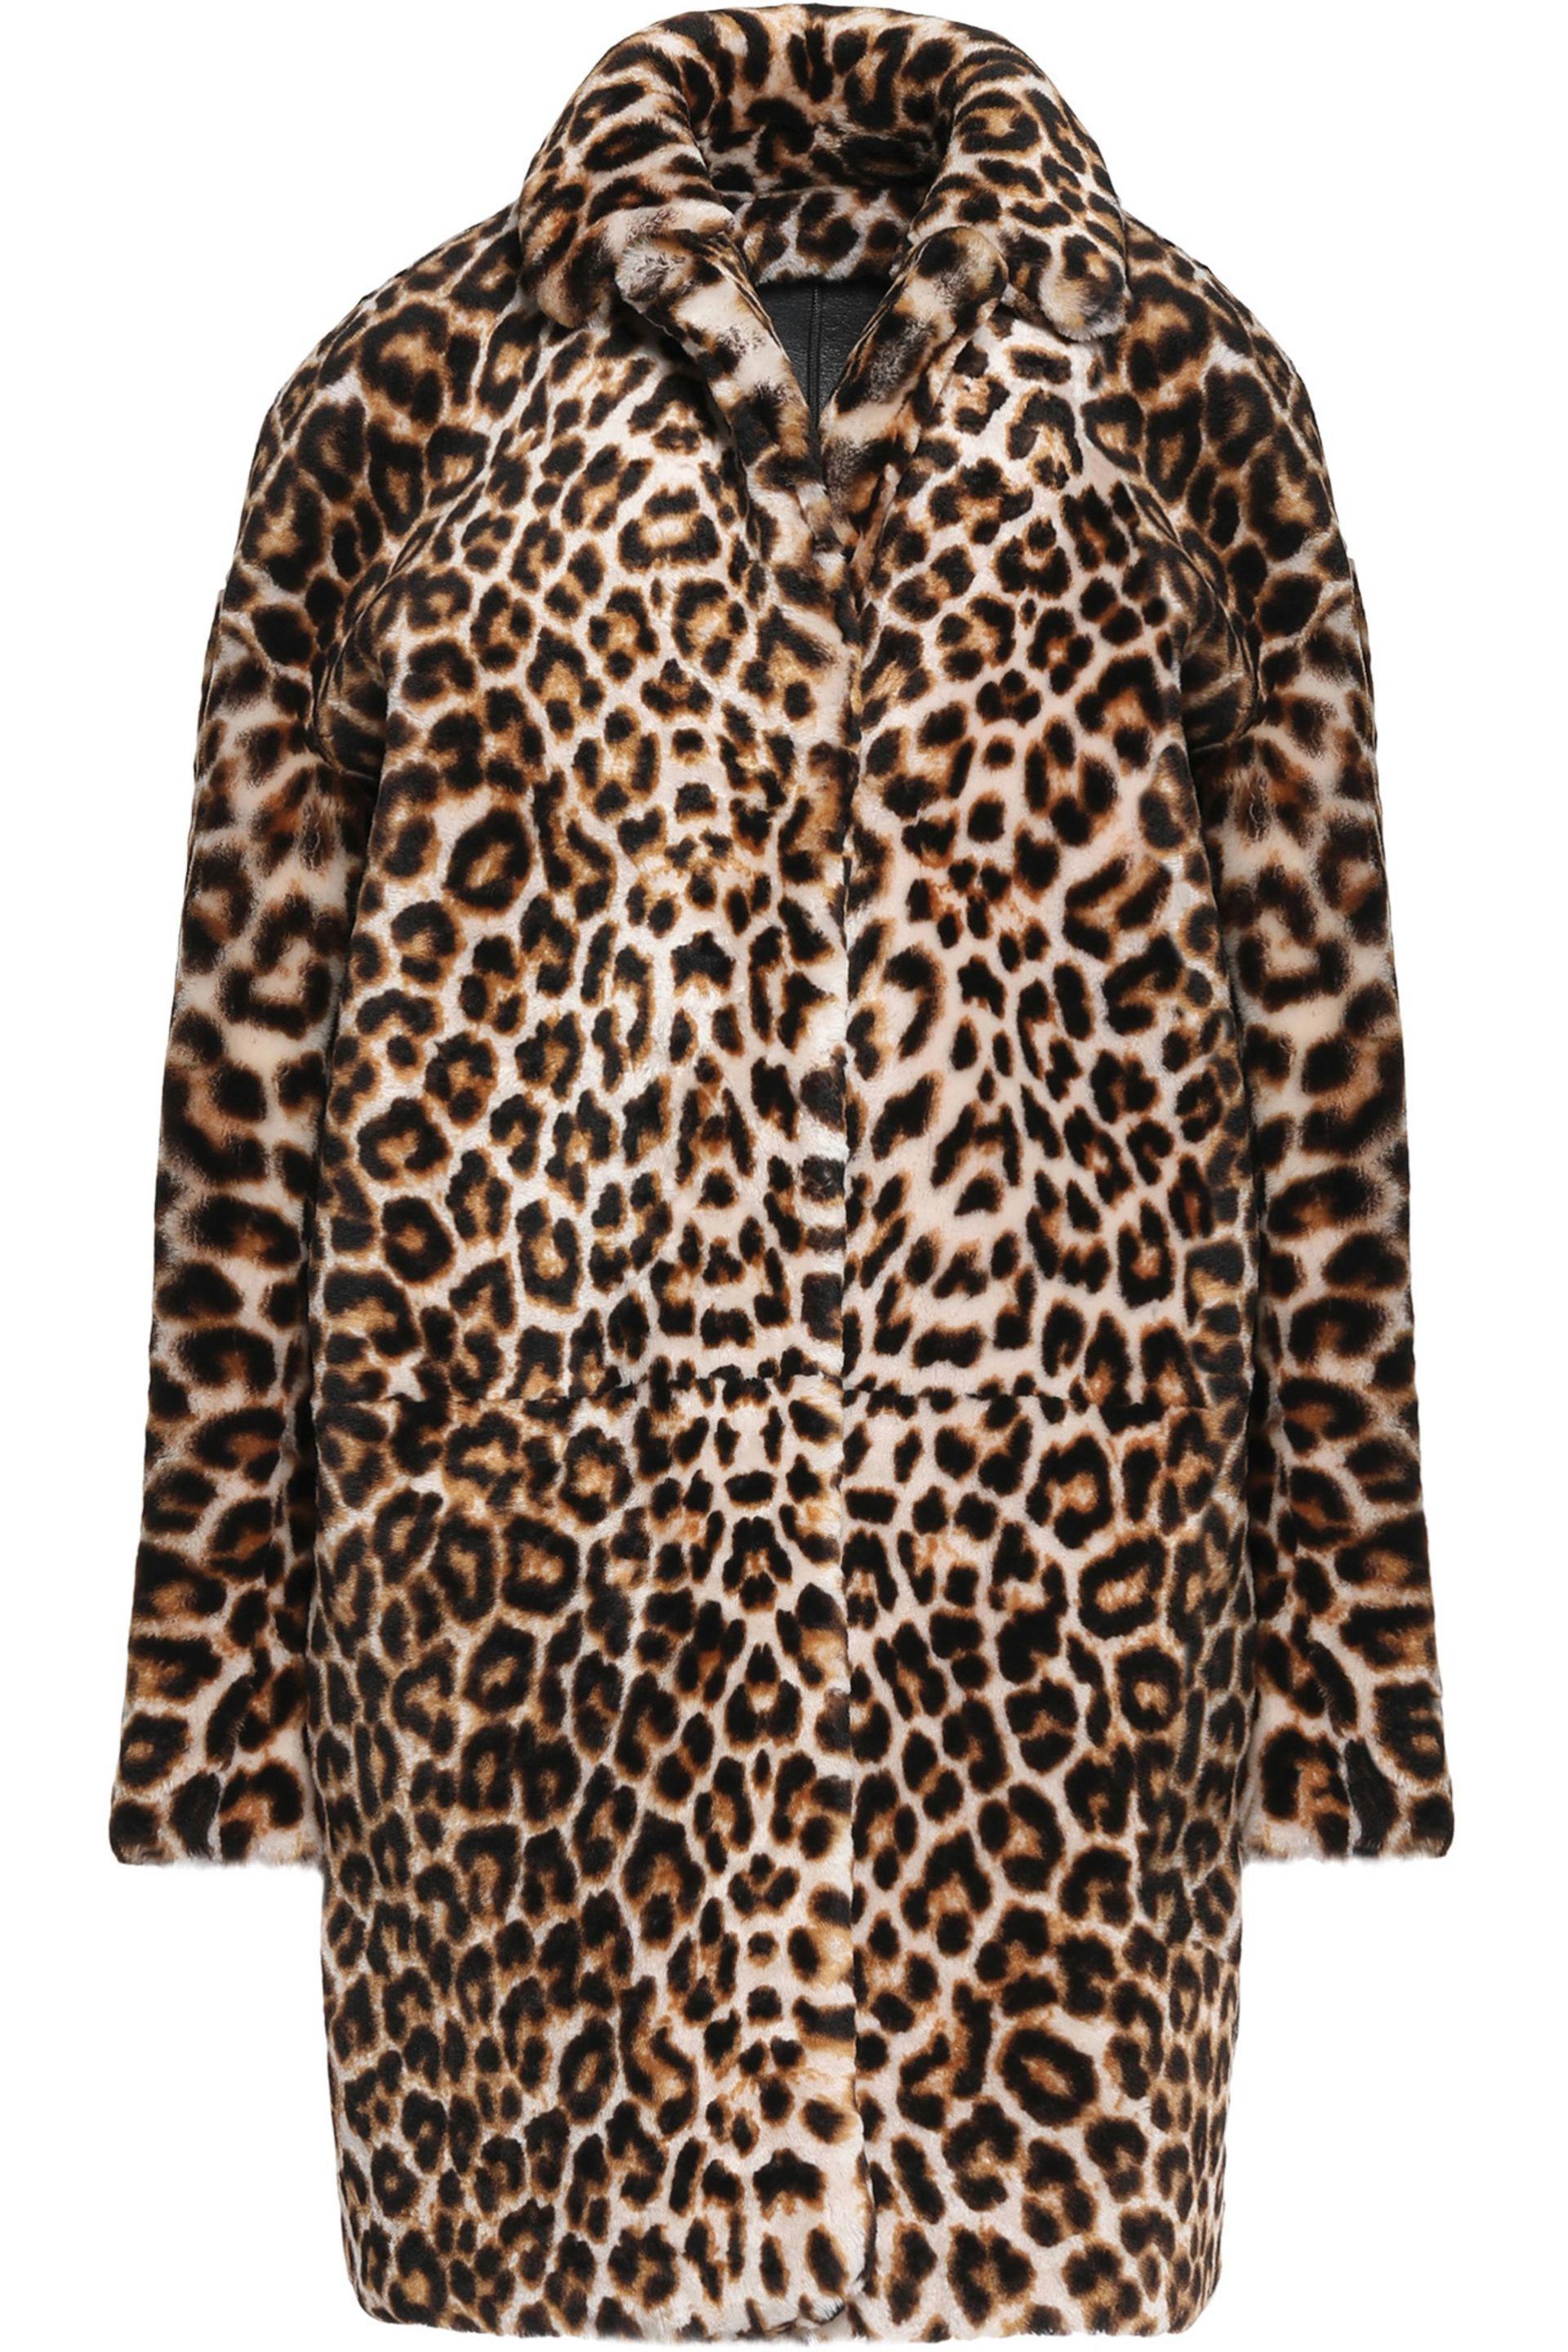 Black And White Leopard Print Faux Fur Coat : Stand Studio Leopard ...